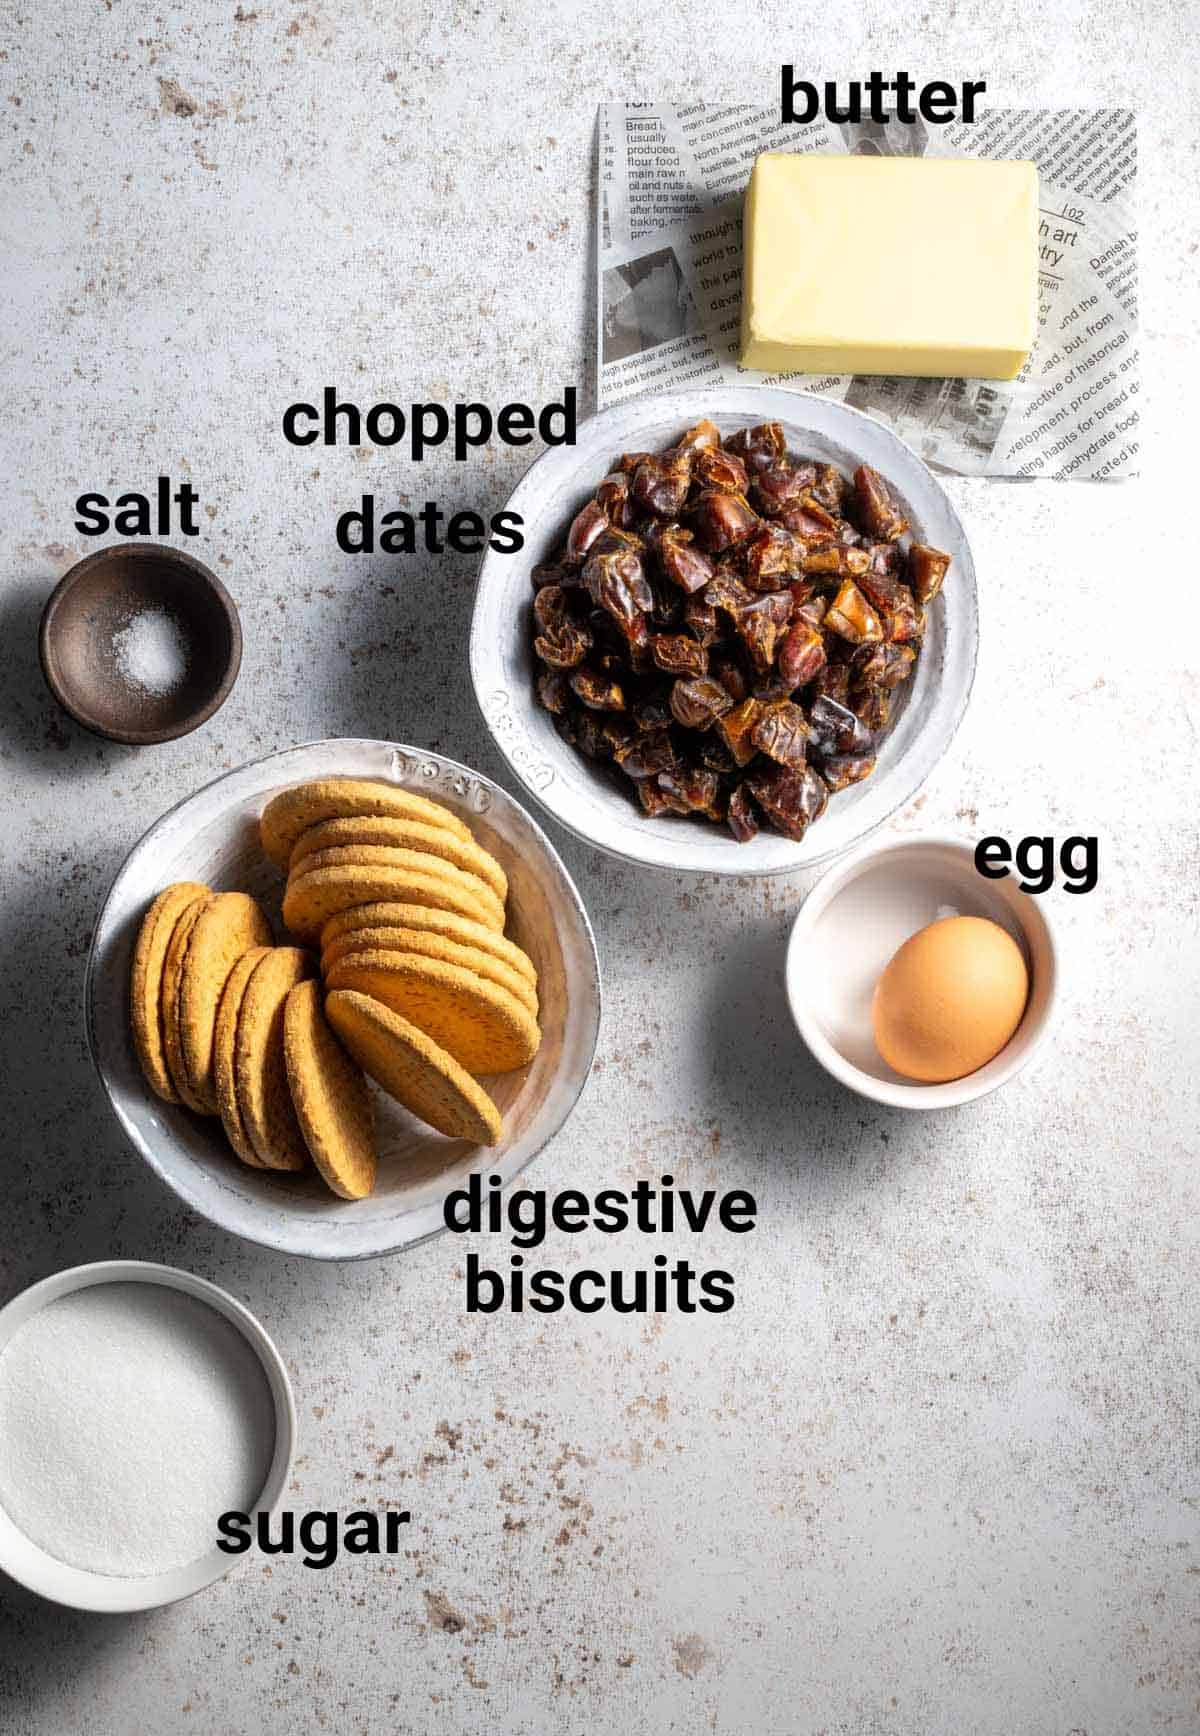 Date squares ingredients